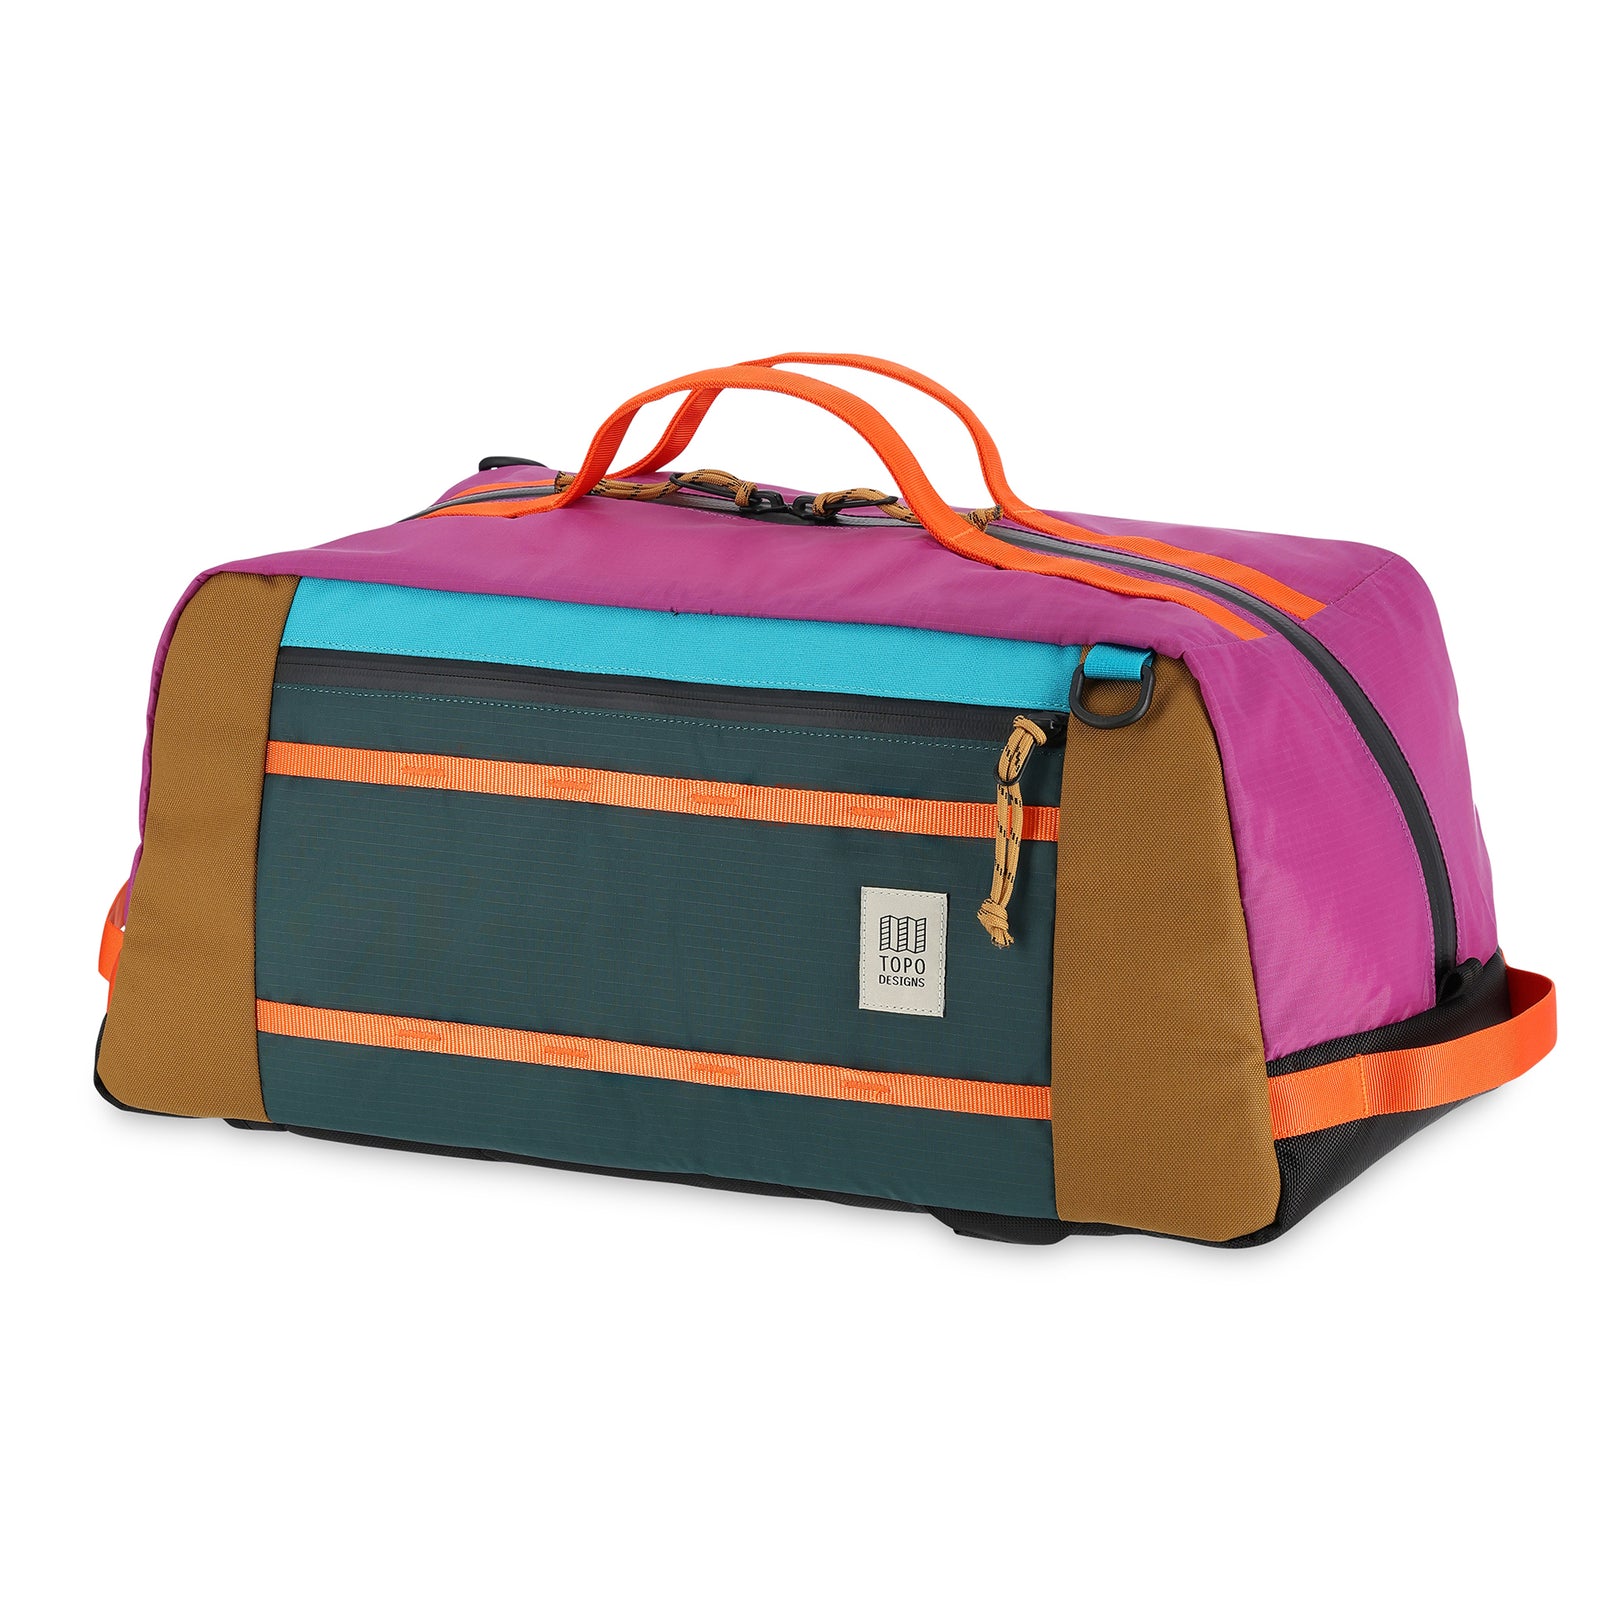 Topo Designs Mountain Duffel 40L backpack gear bag in recycled "Botanic Green / Grape" nylon.